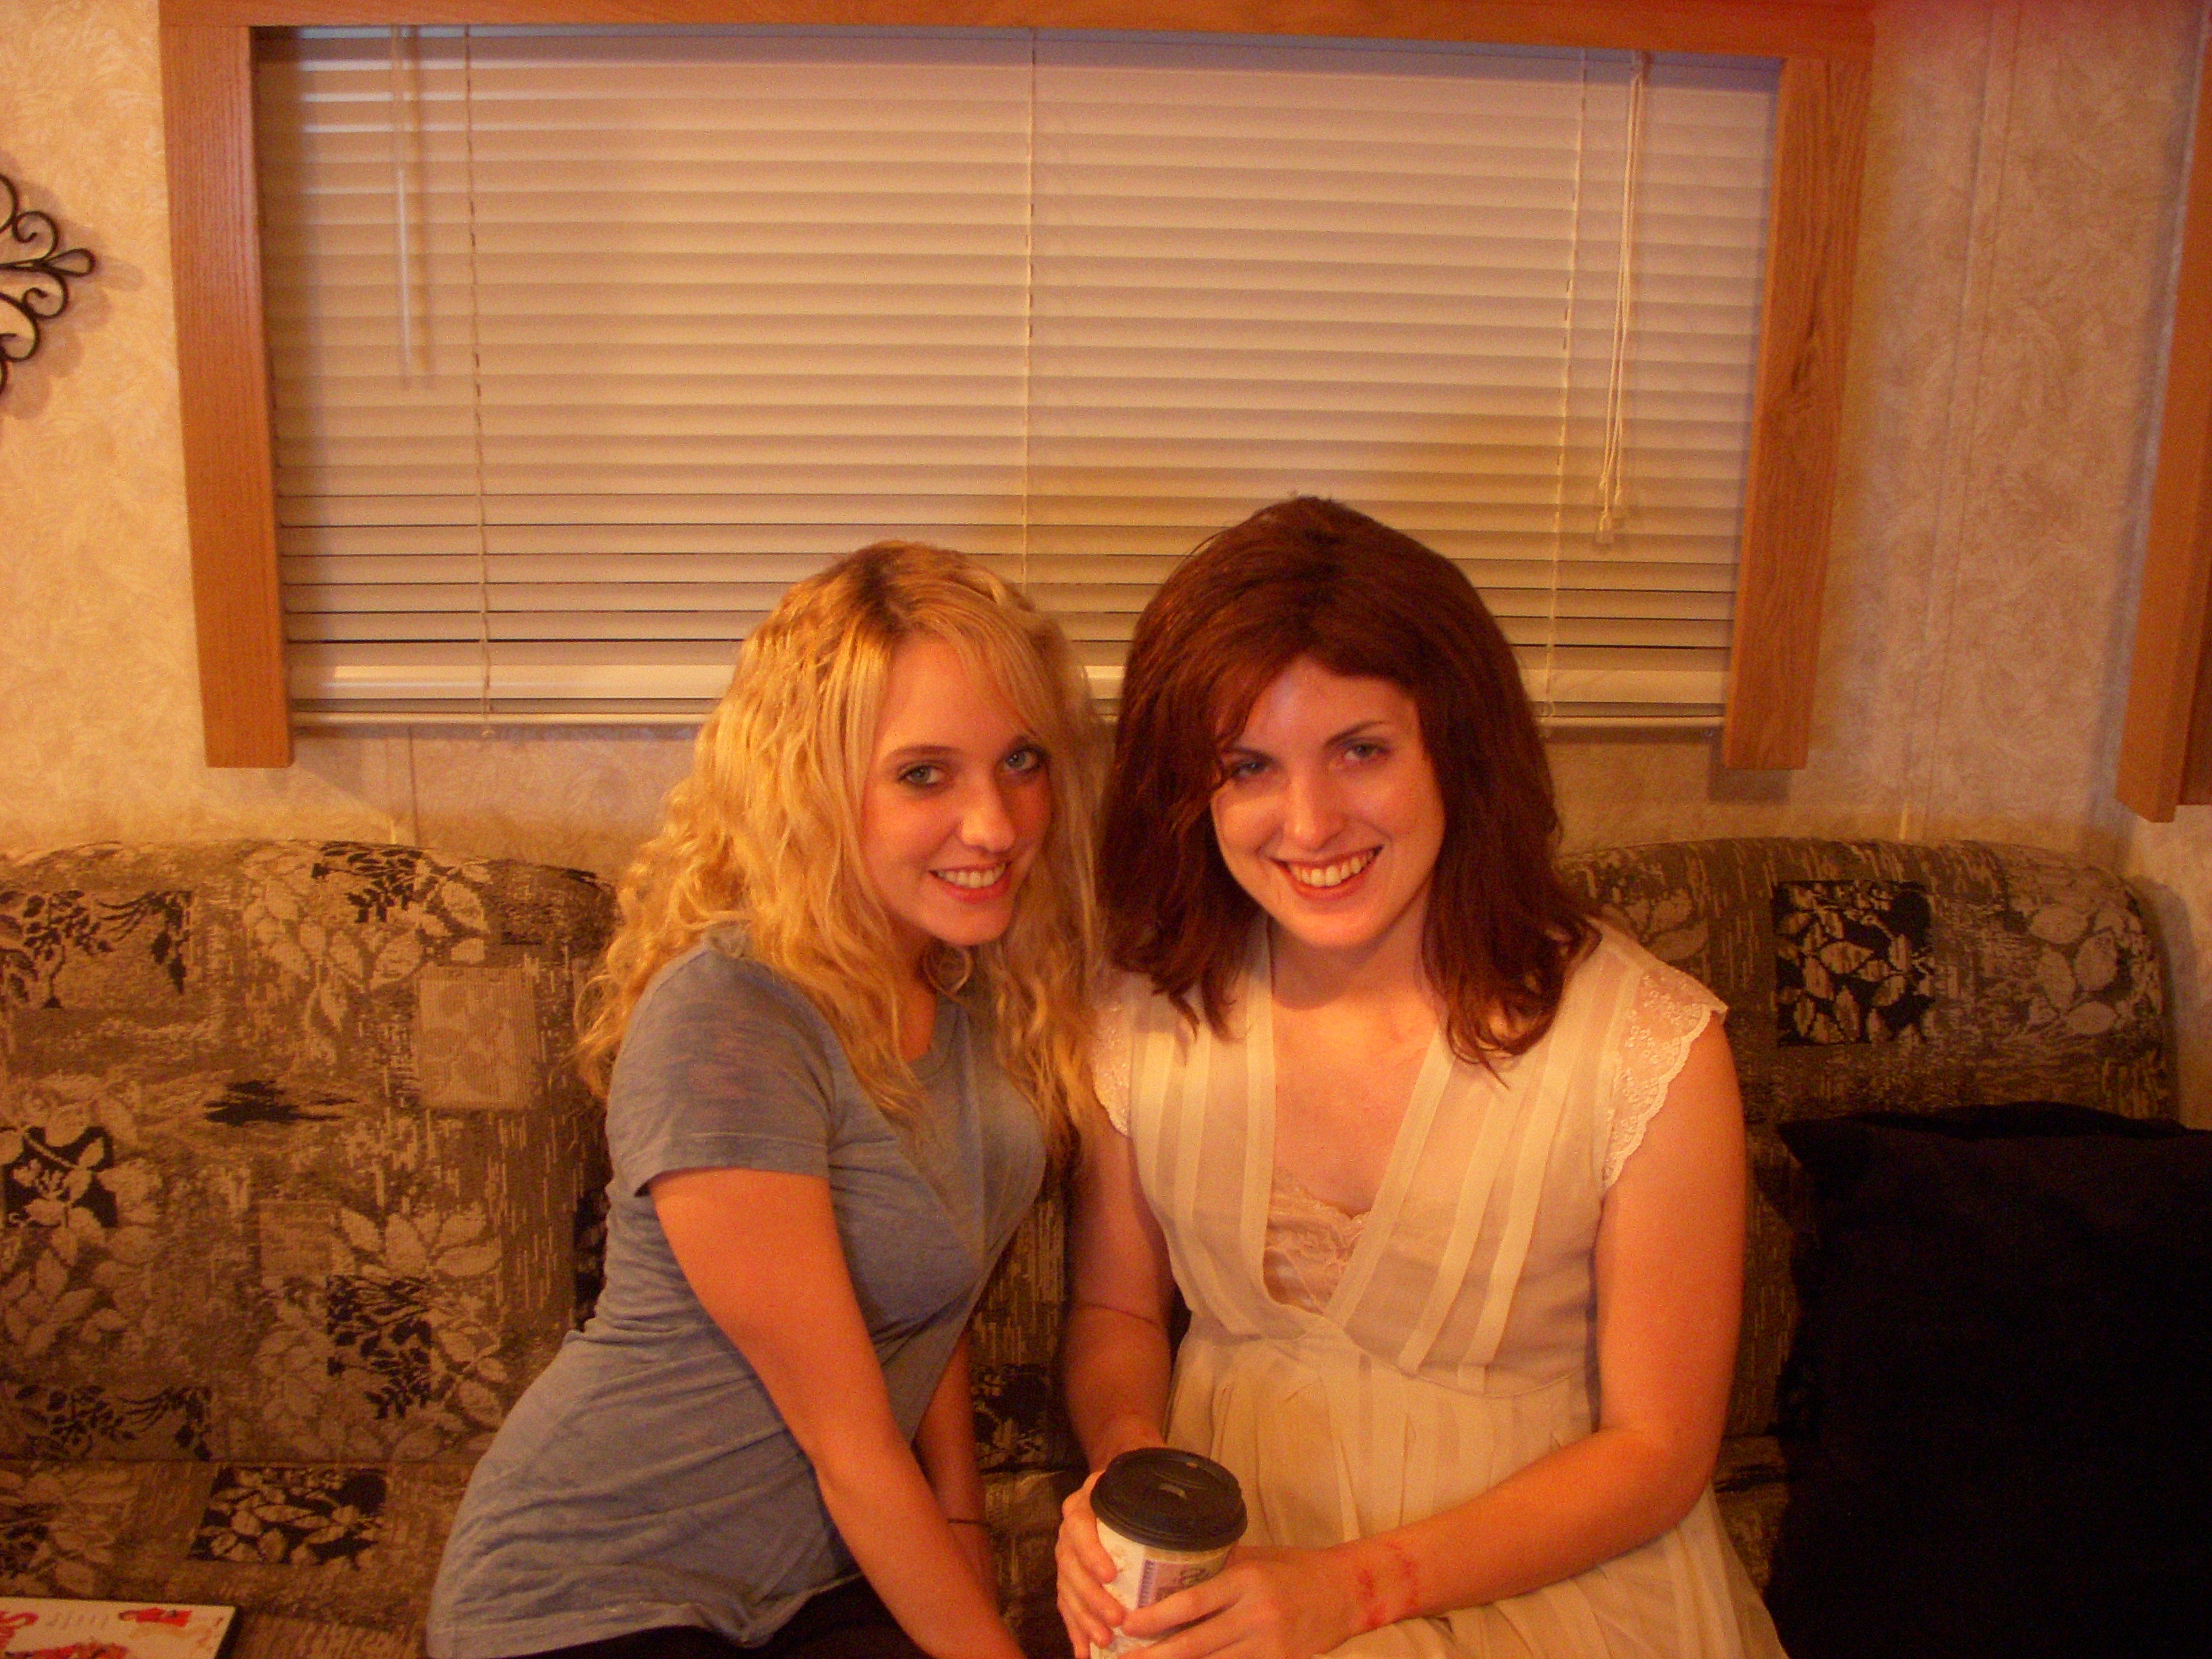 Kara Mann and Ashley Nicole Hudson on the set of the movie Deadline (2009)